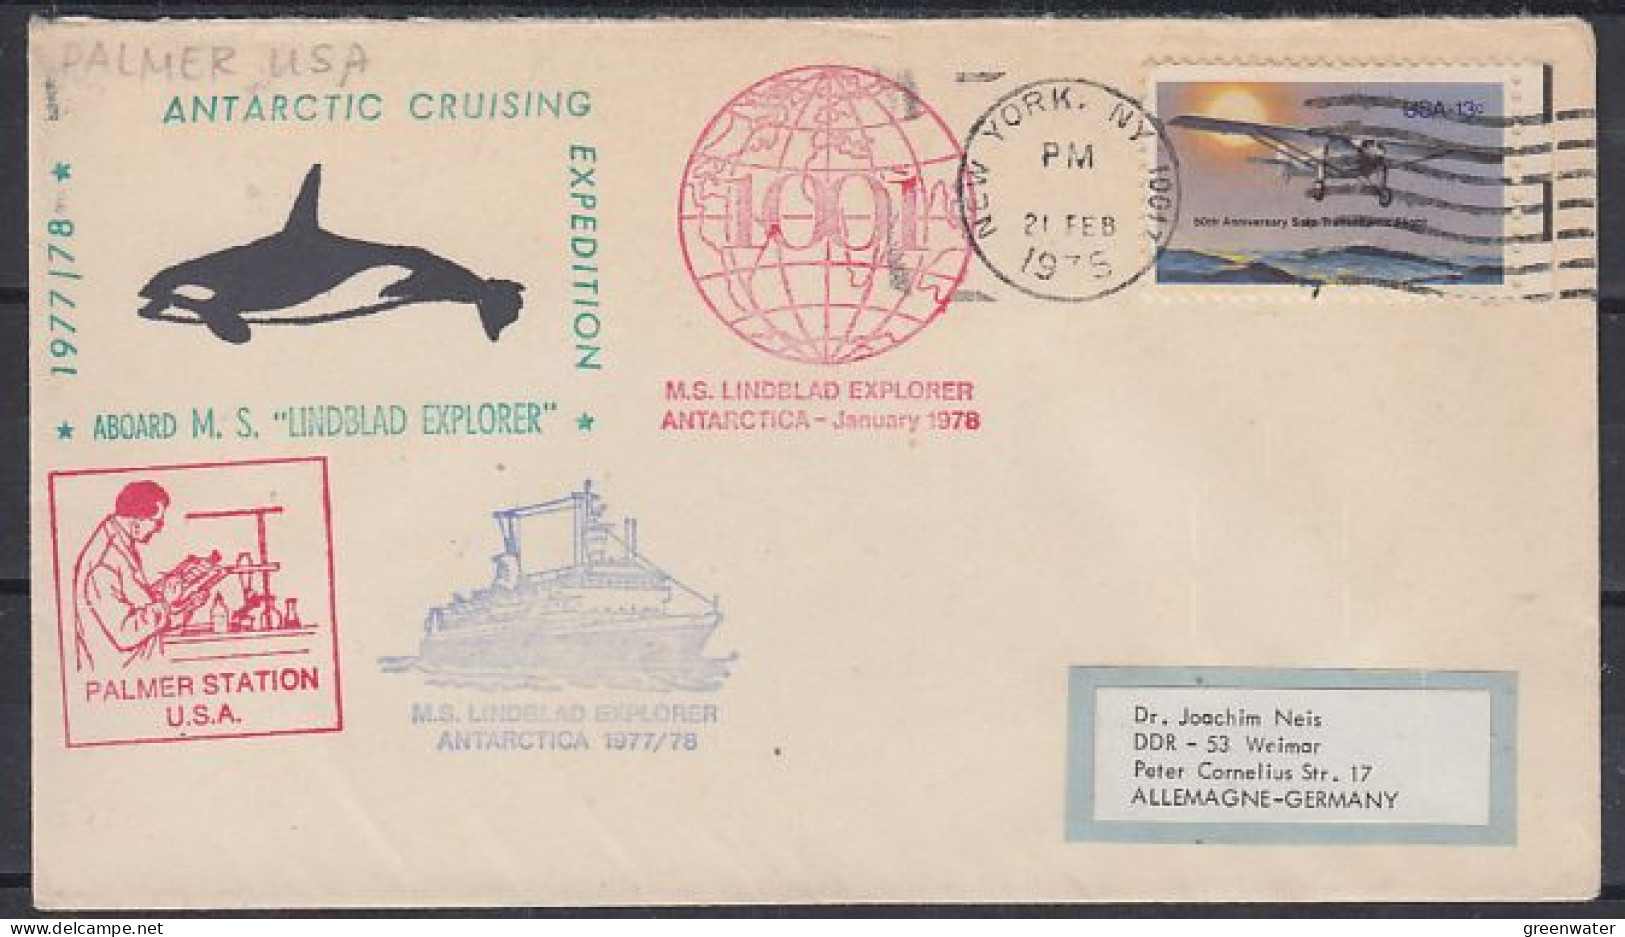 USA  MS Lindblad Explorer Antarctic Cruising Expedition 1977/1978 Ca Palmer Station Ca NY 21 FEB 1975 (59729) - Polar Ships & Icebreakers